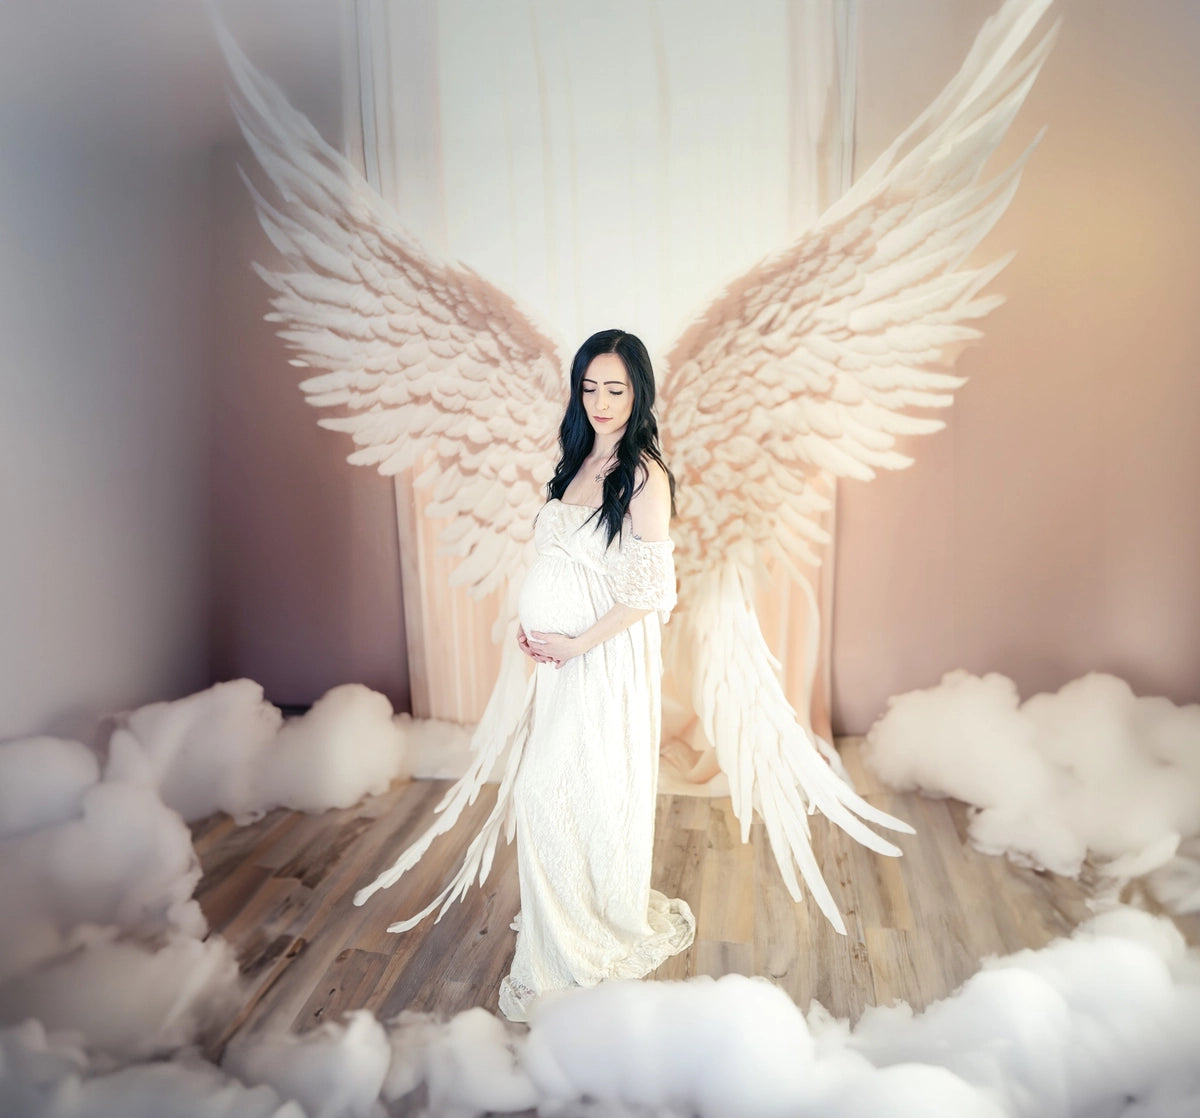 Witte Engelen Vleugel Gordijnen Achtergrond Ontworpen door Chain Photography